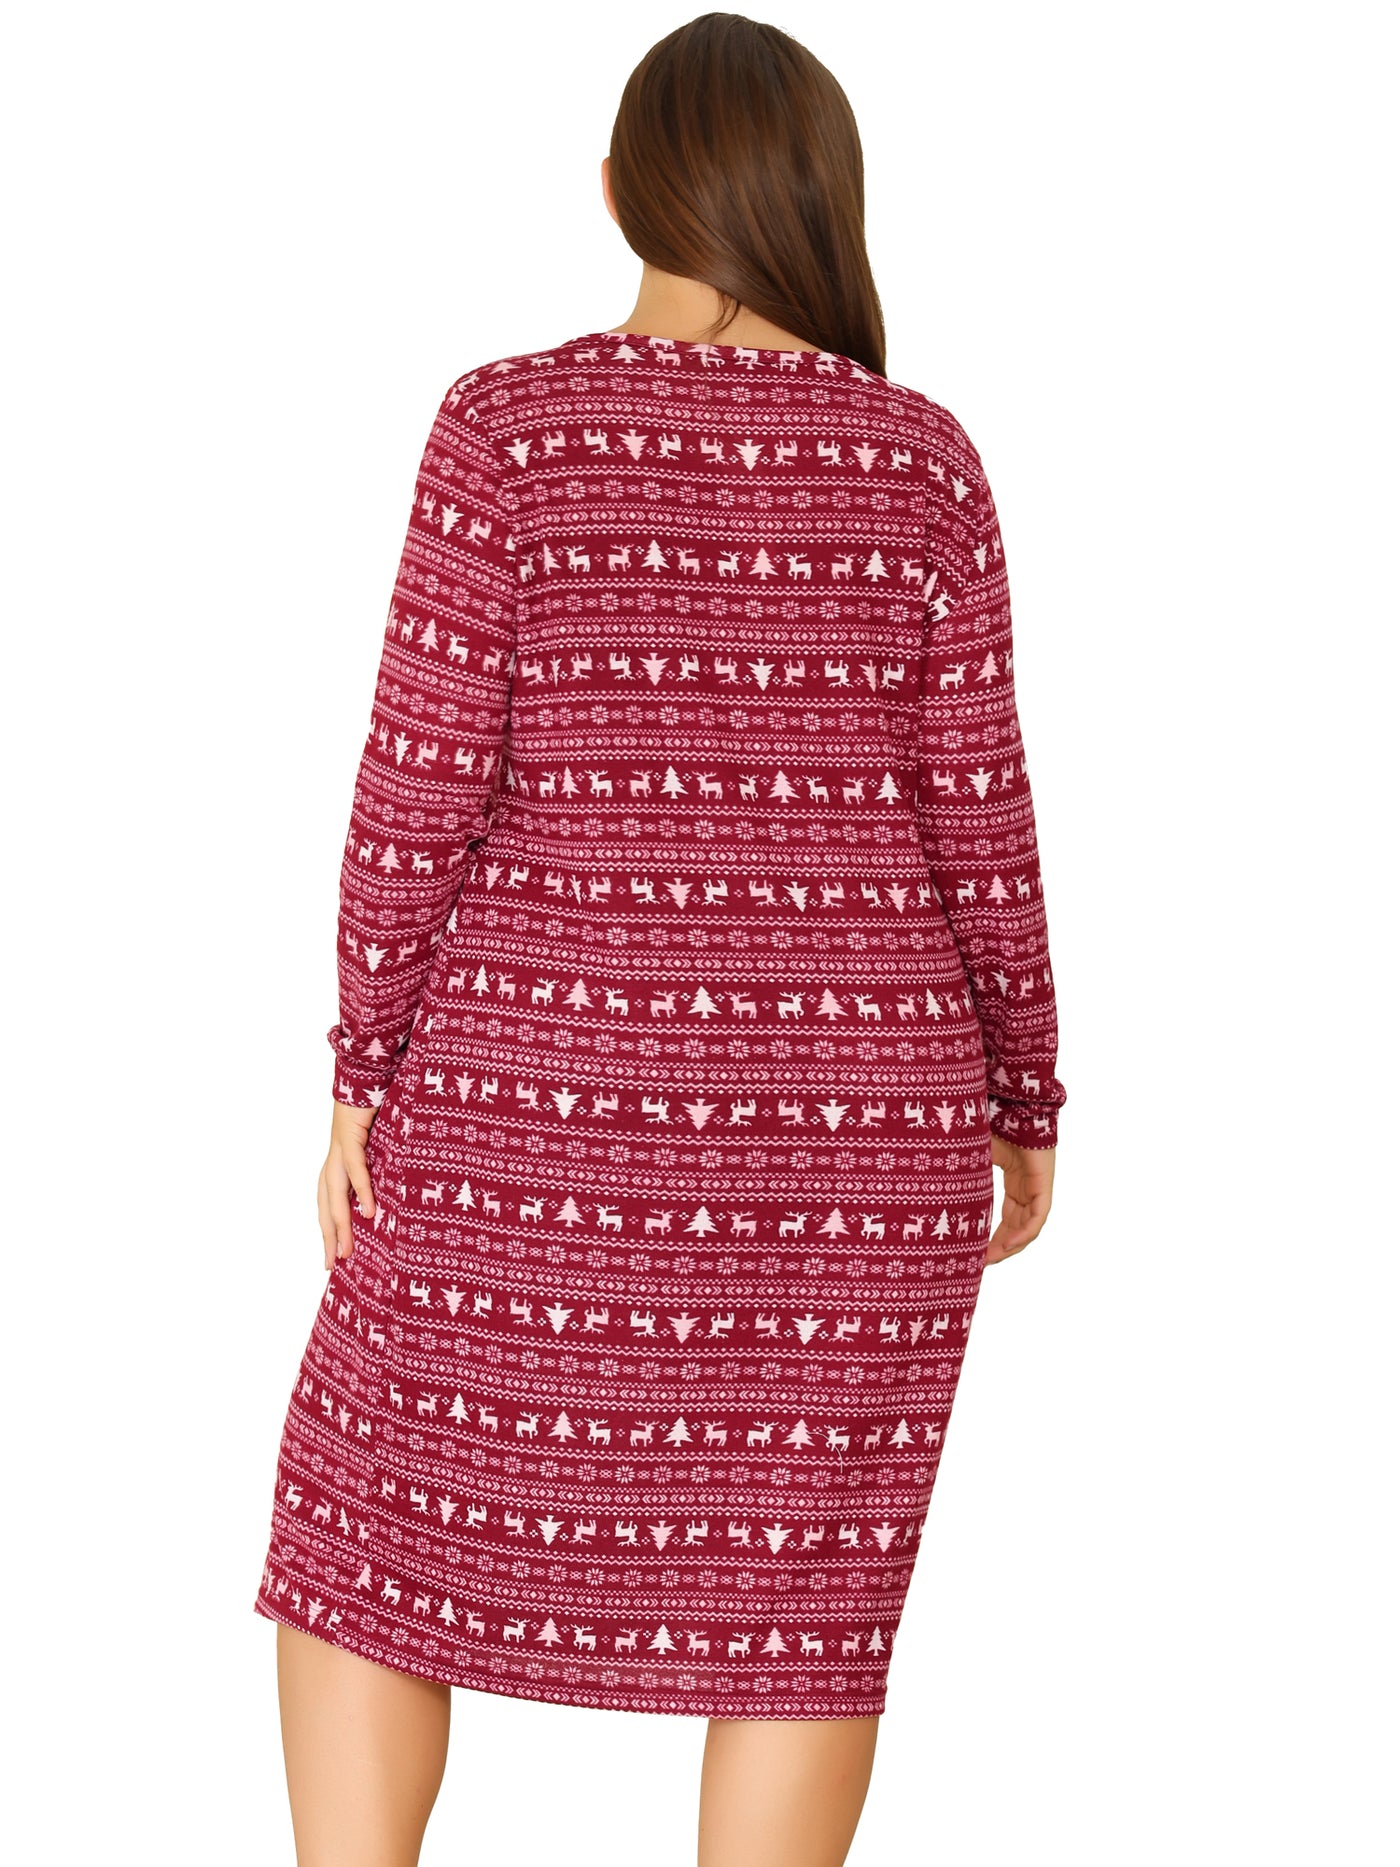 Bublédon Women's Plus Size Sleepwear Comfy Long Sleeve Sleep Dress Nightgown